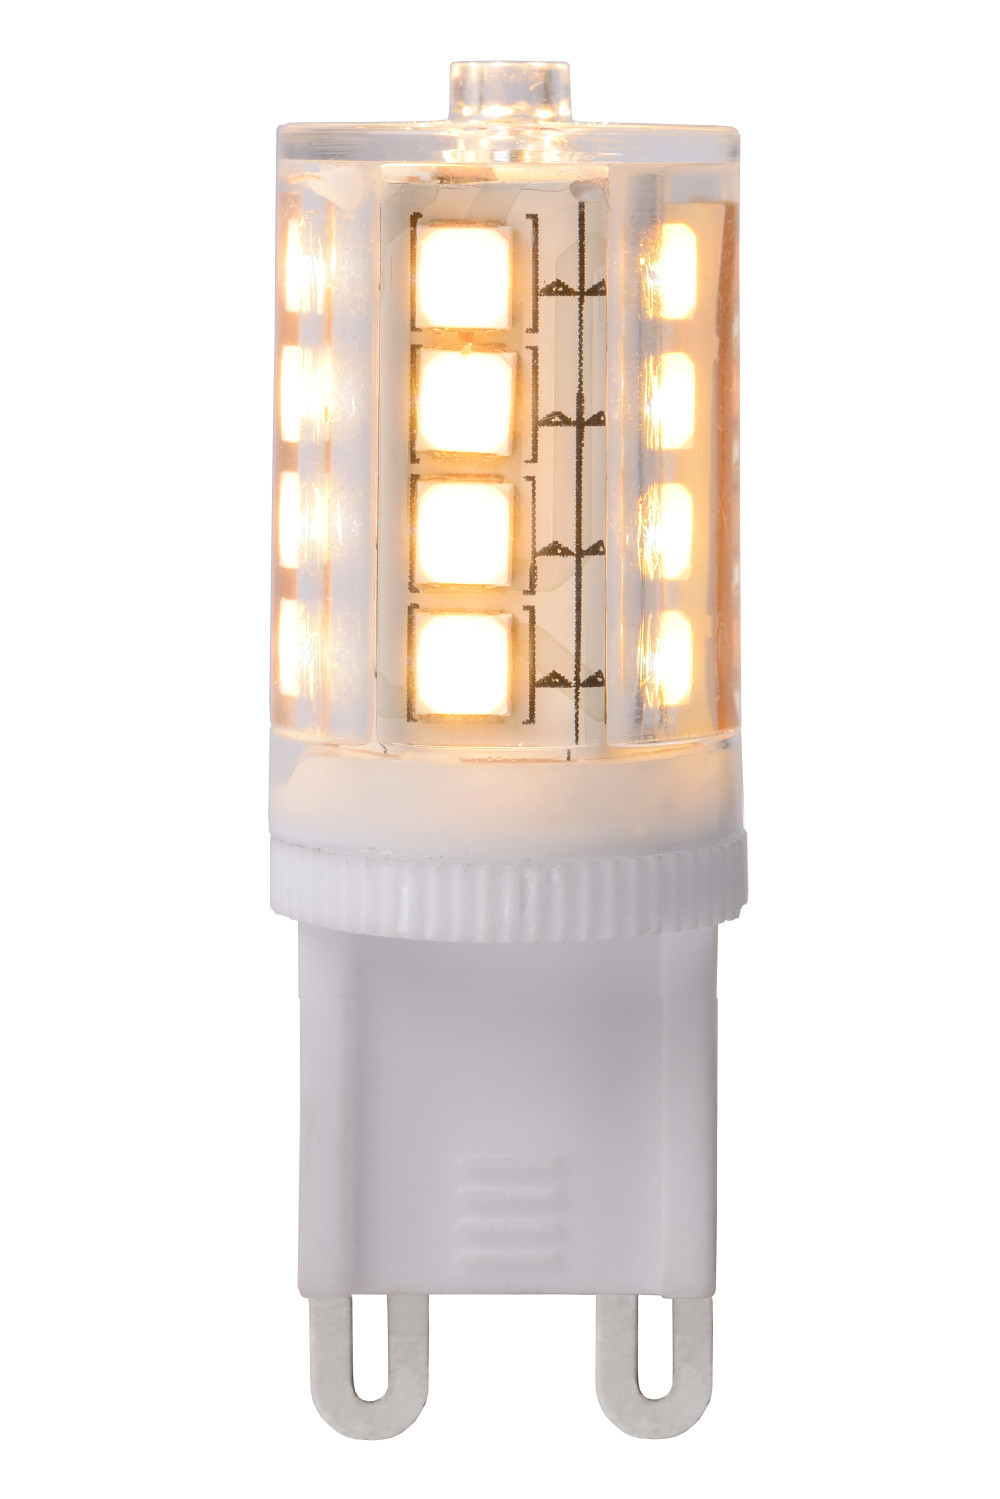 Lucide G9 - Led lamp - Ø 1,5 cm - LED Dimb. - G9 - 1x3,5W 2700K - Wit